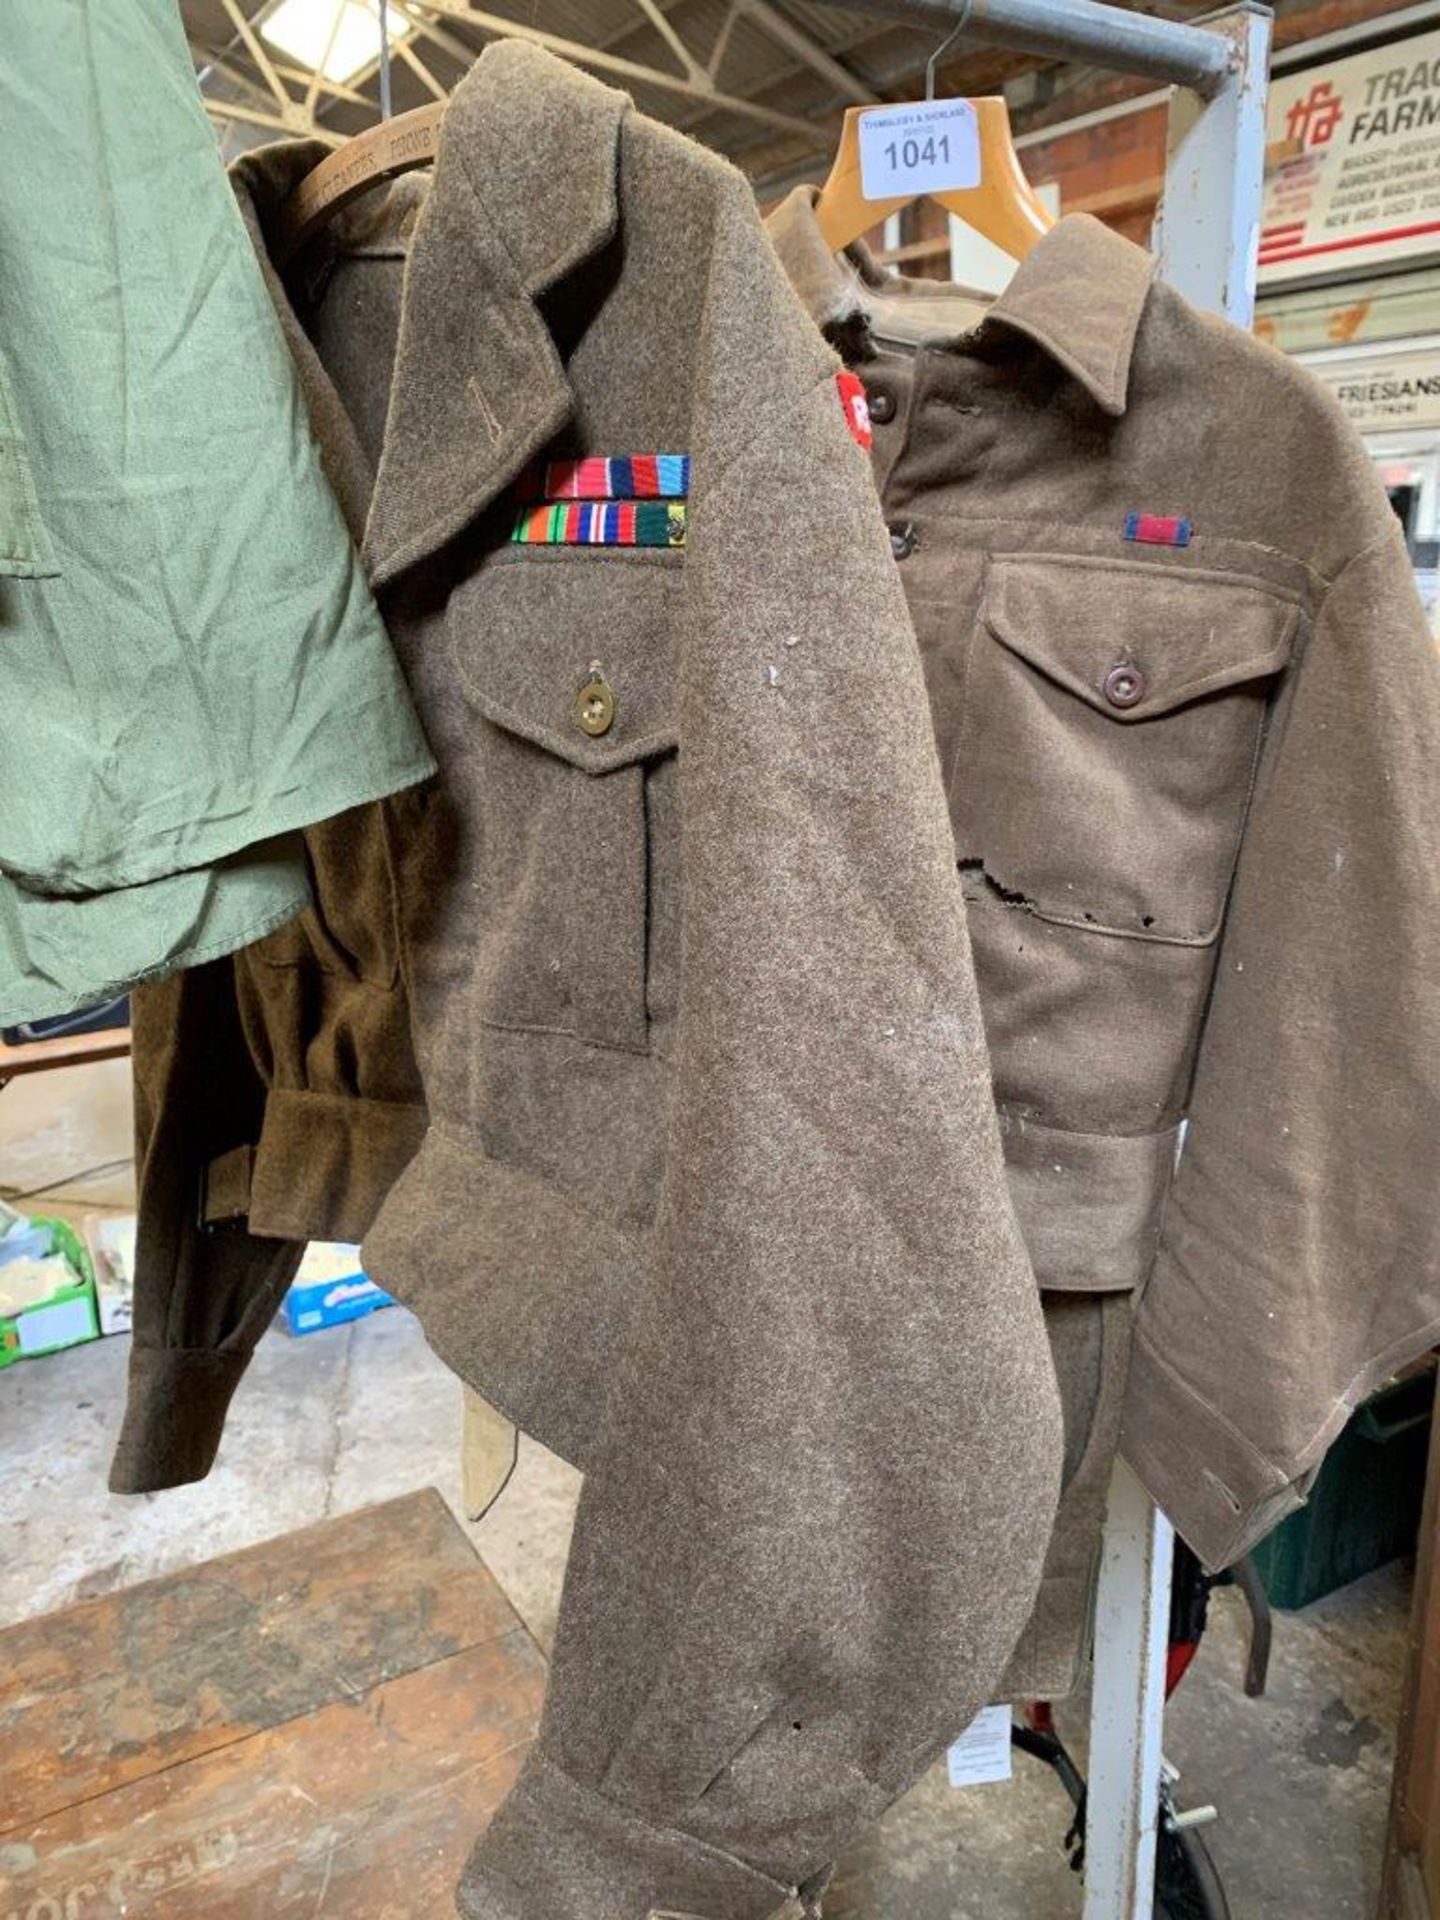 2 British Army battle dress tops, trousers, kit bag.